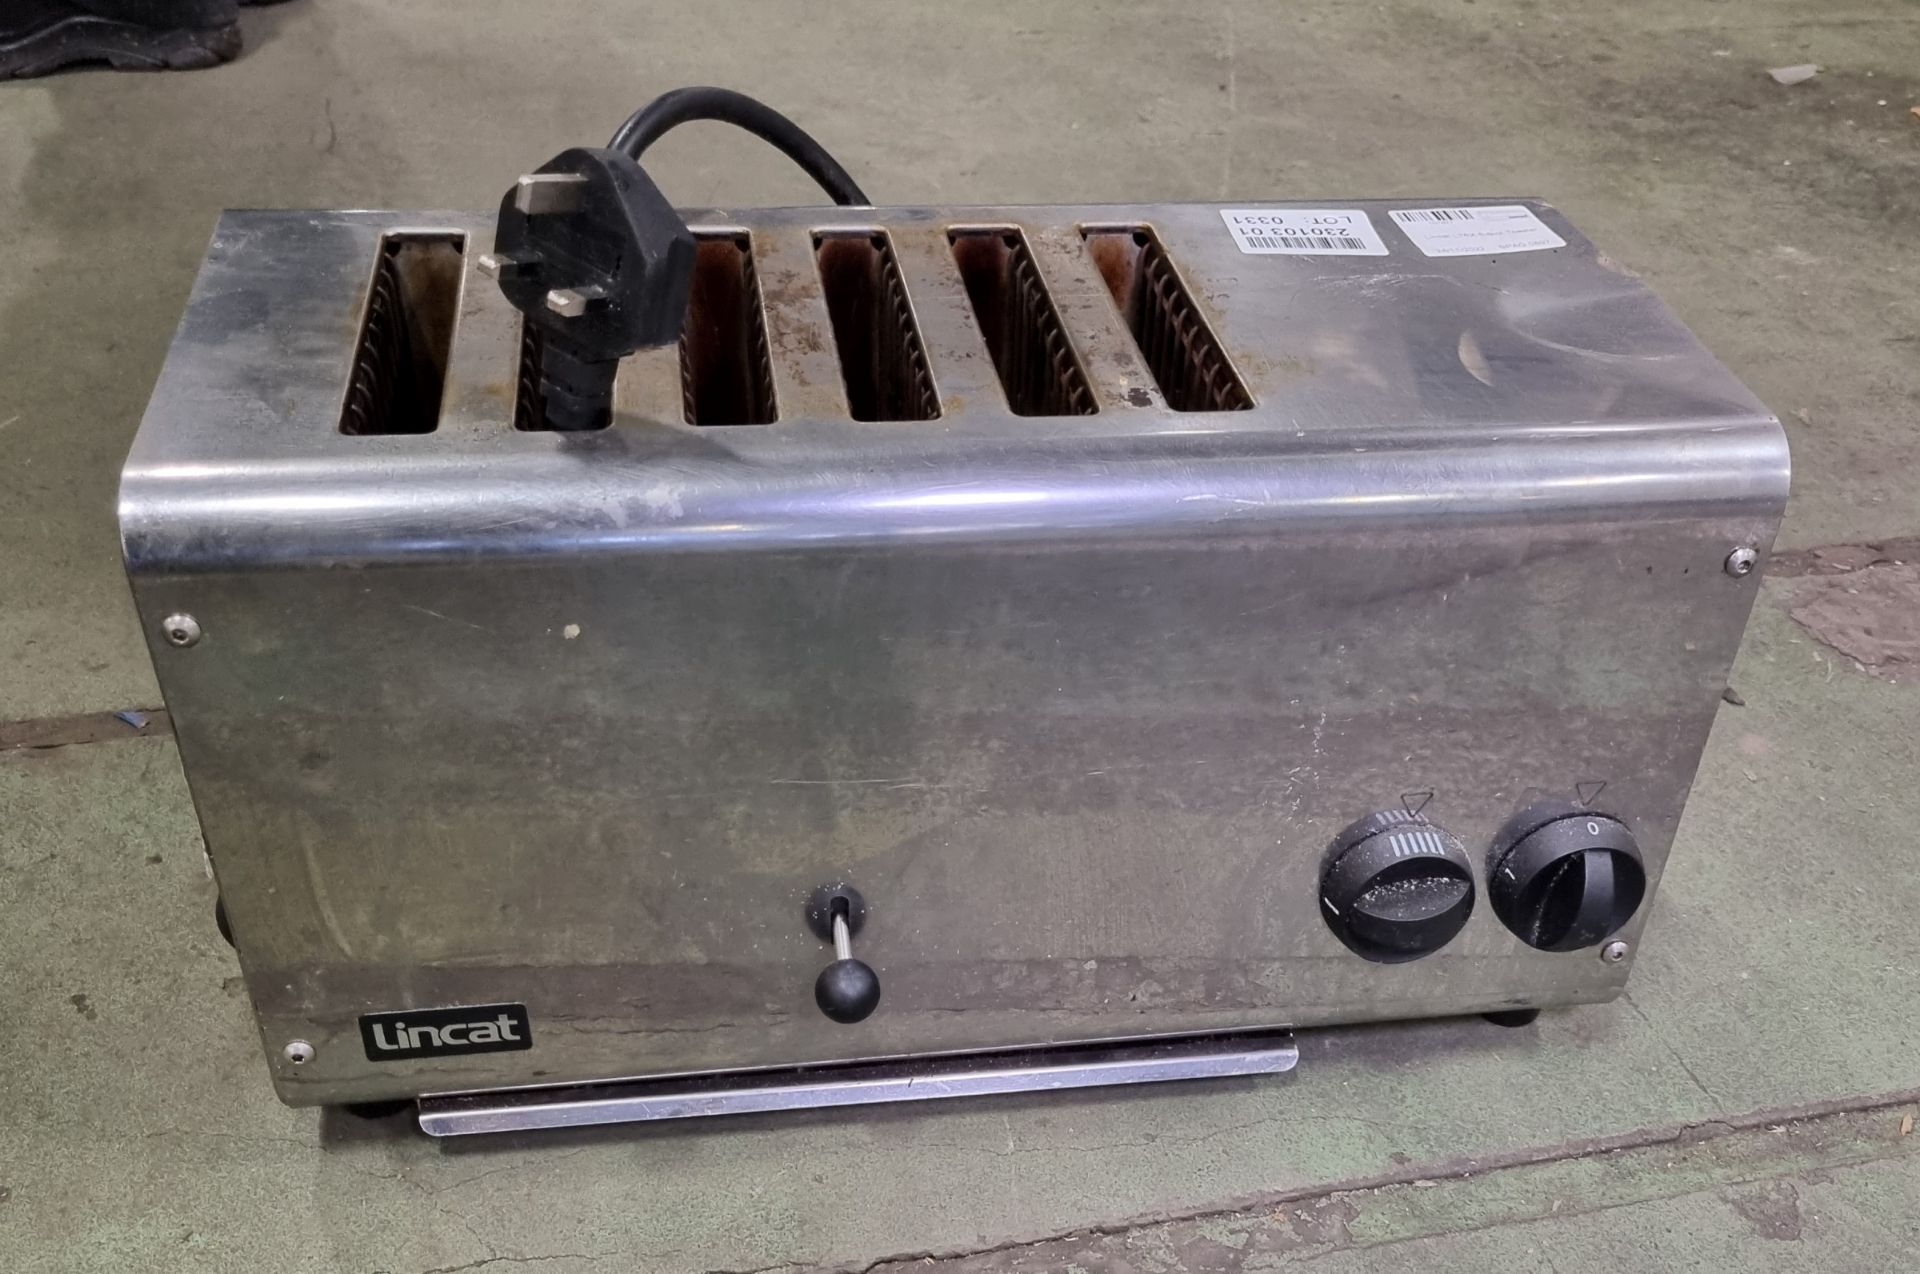 Lincat LT6X 6-Slot Toaster